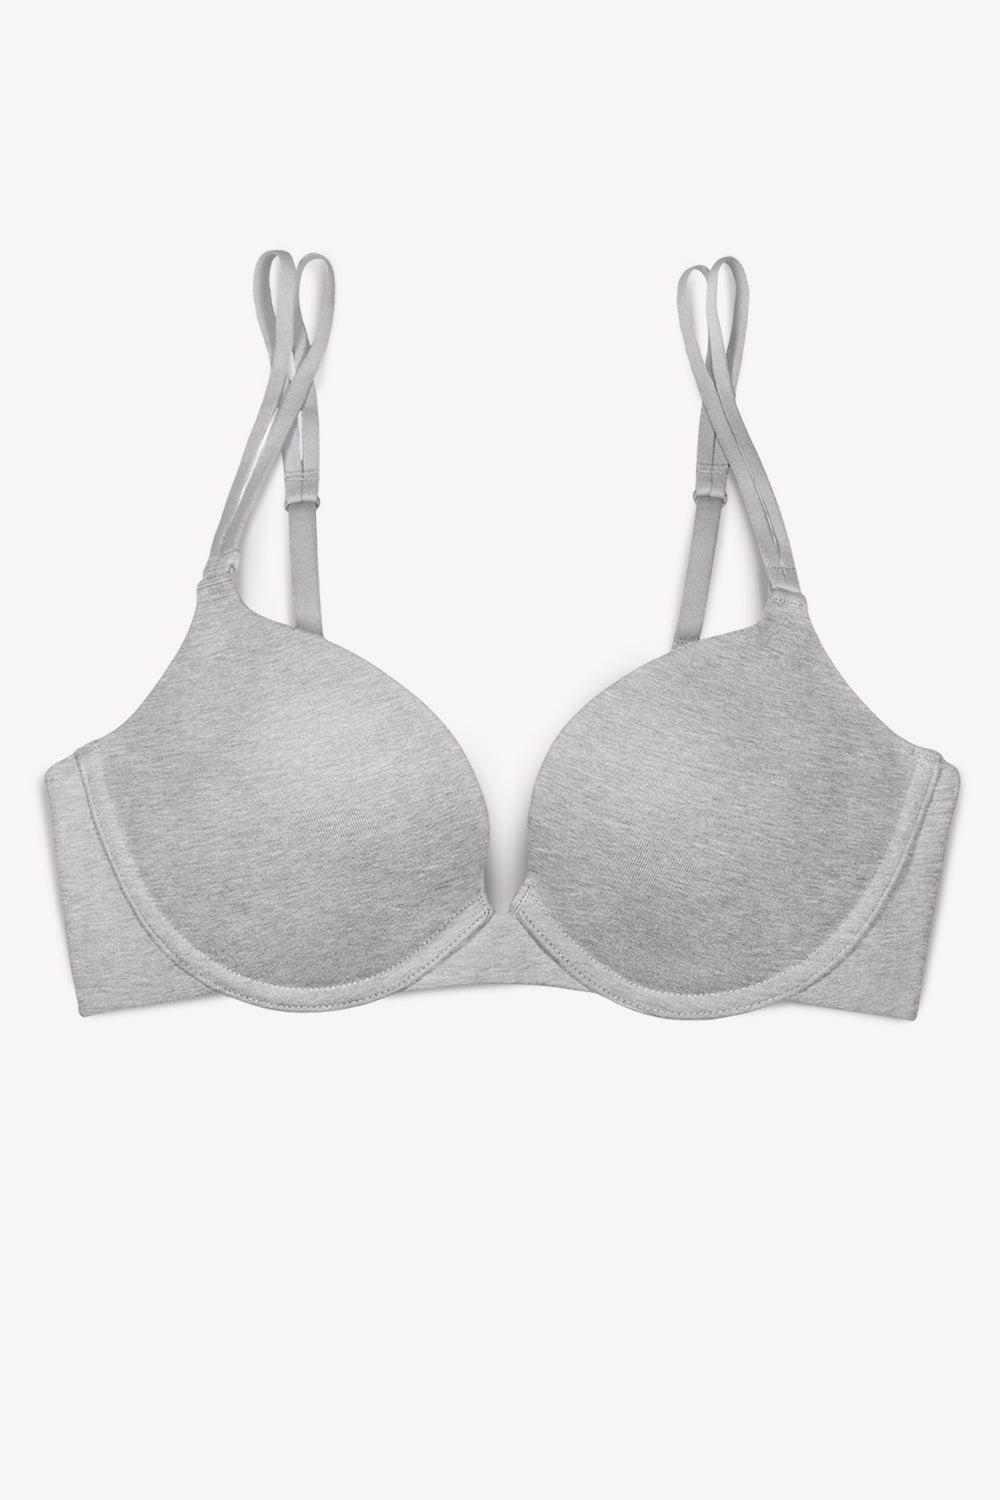 Grey Women's Bras: Shop Sexy Push Up Bras, T-Shirt Bras & More 34I